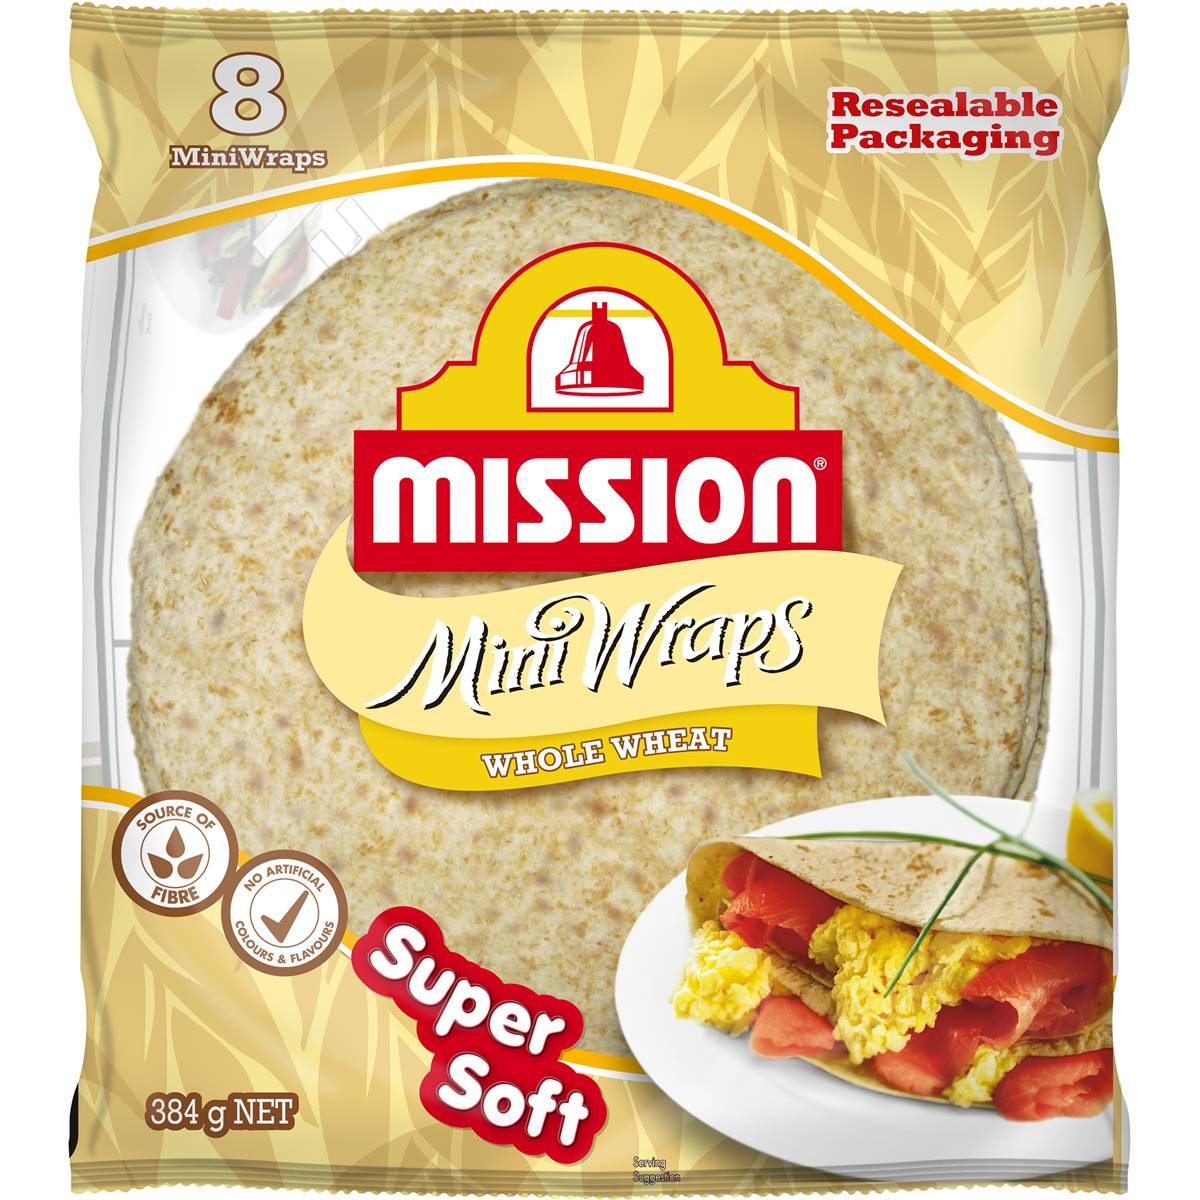 Calories in Mission Wraps Mini Wheat